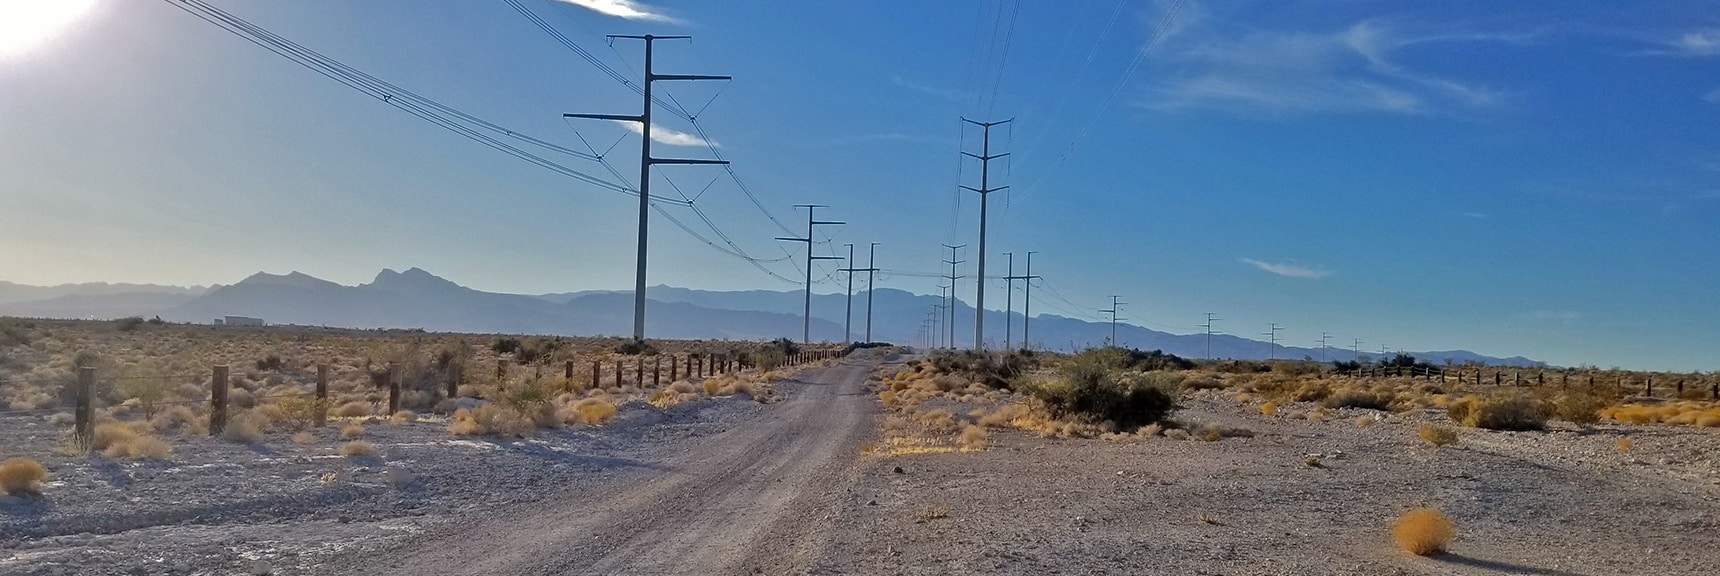 Maintenance Road Along Power LInes. | Gass Peak Road Circuit | Desert National Wildlife Refuge | Nevada